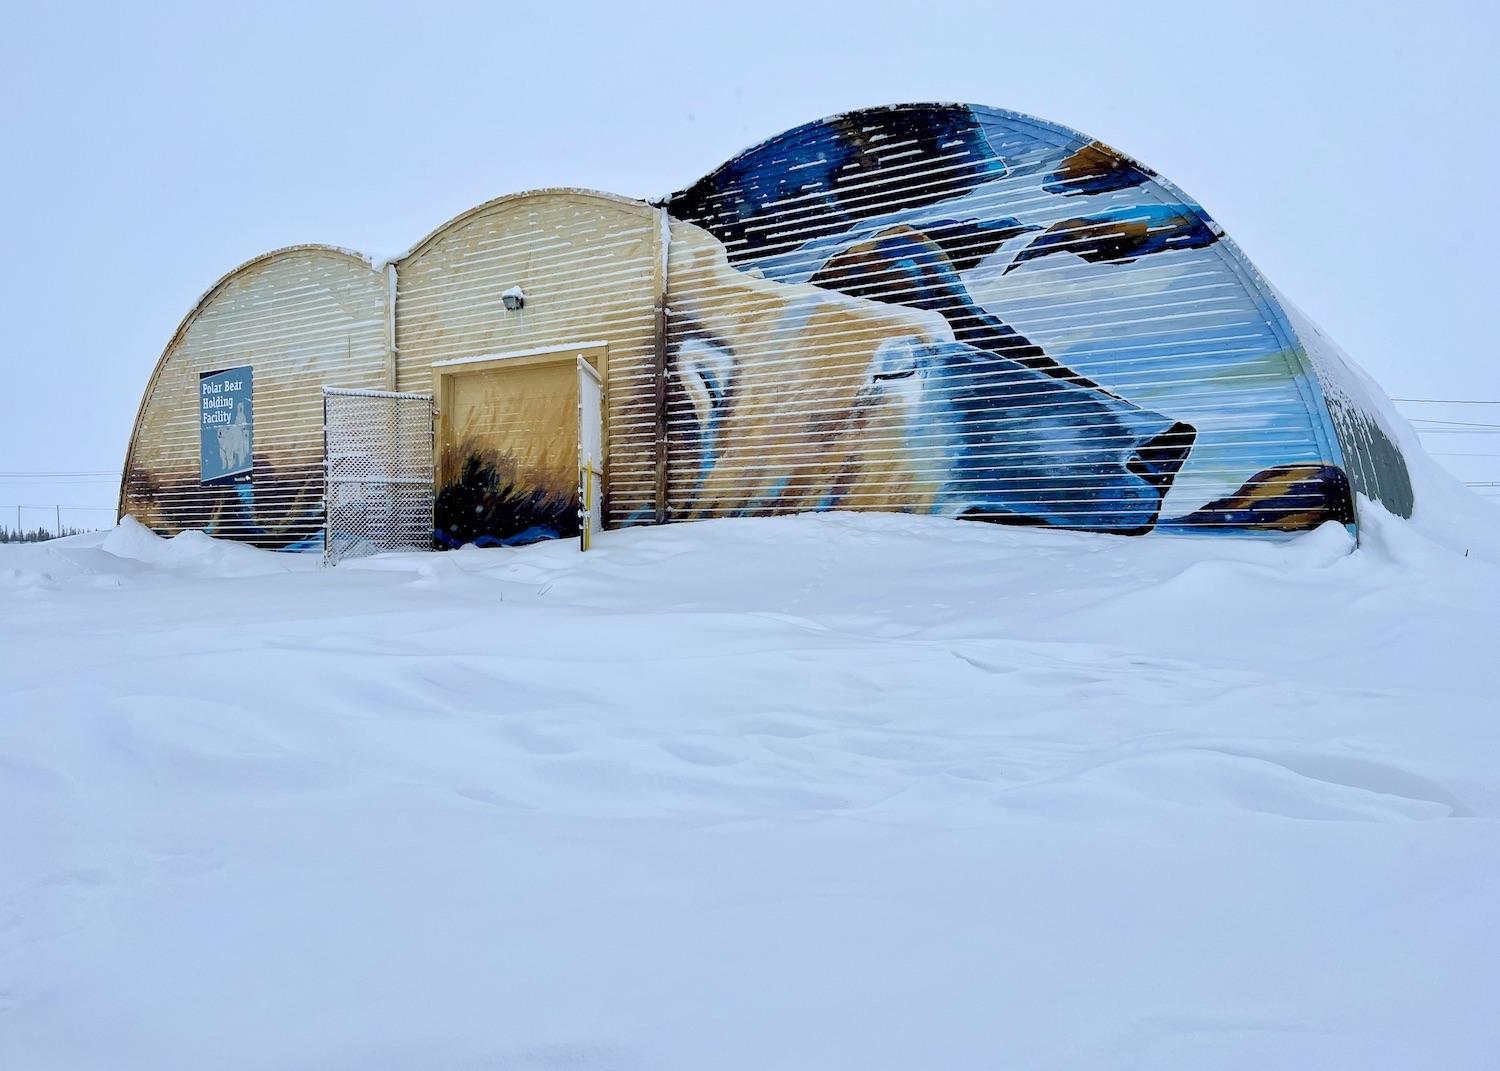 The Polar Bear Holding Facility ("polar bear jail") in Churchill lends itself to Kal Barteski's mural as part of SeaWalls Churchill.